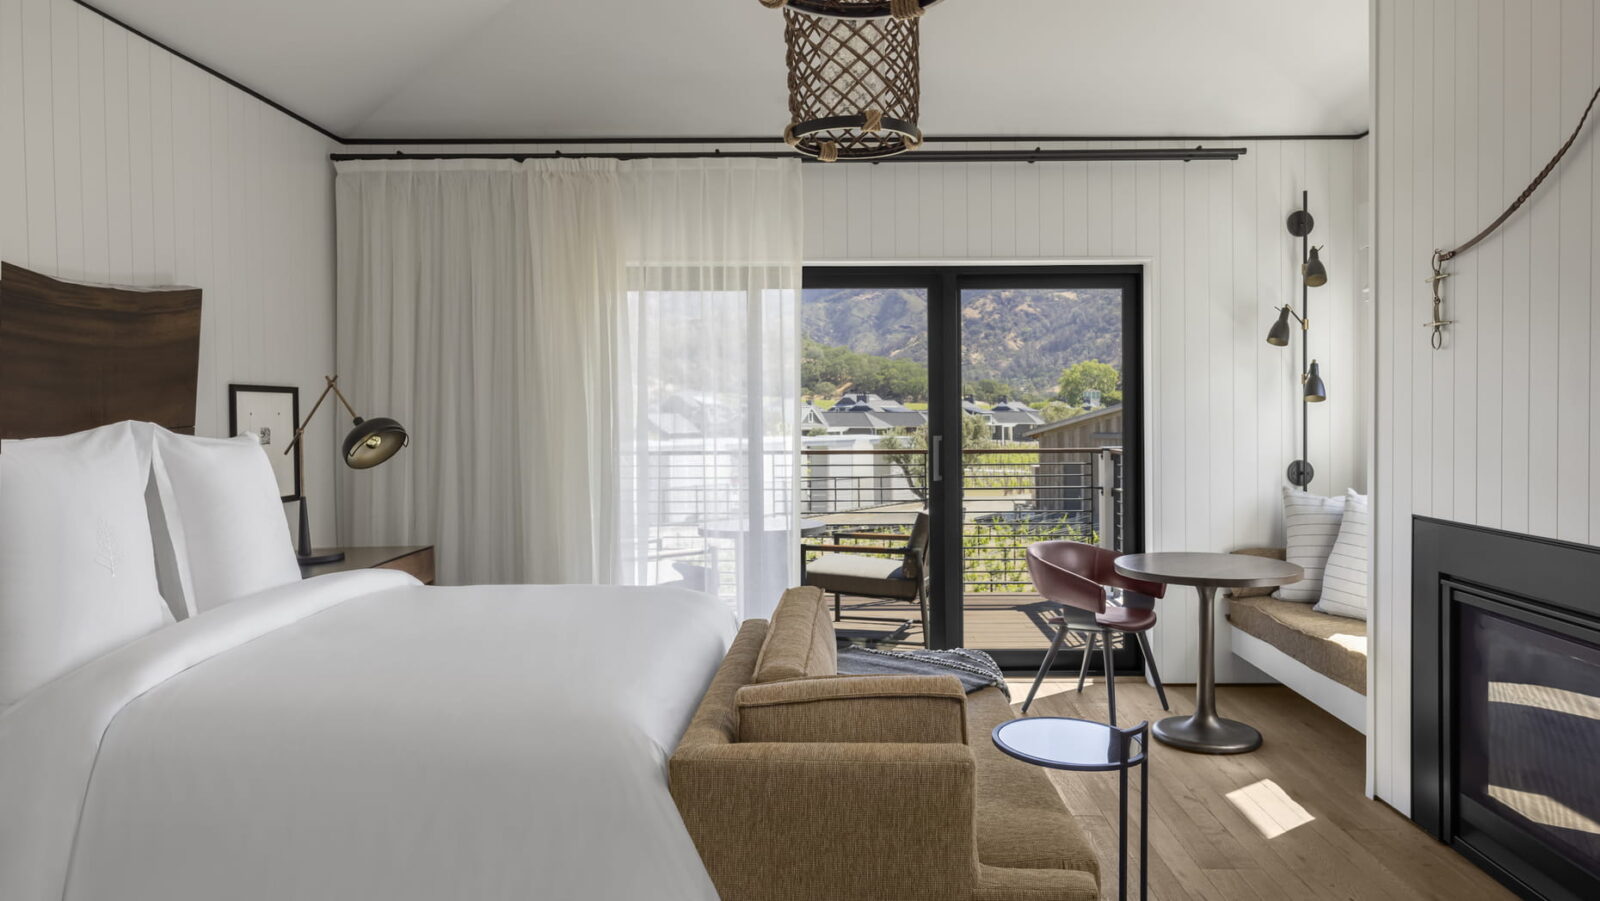 Four Seasons resort Napa Valley bedroom with vineyard view